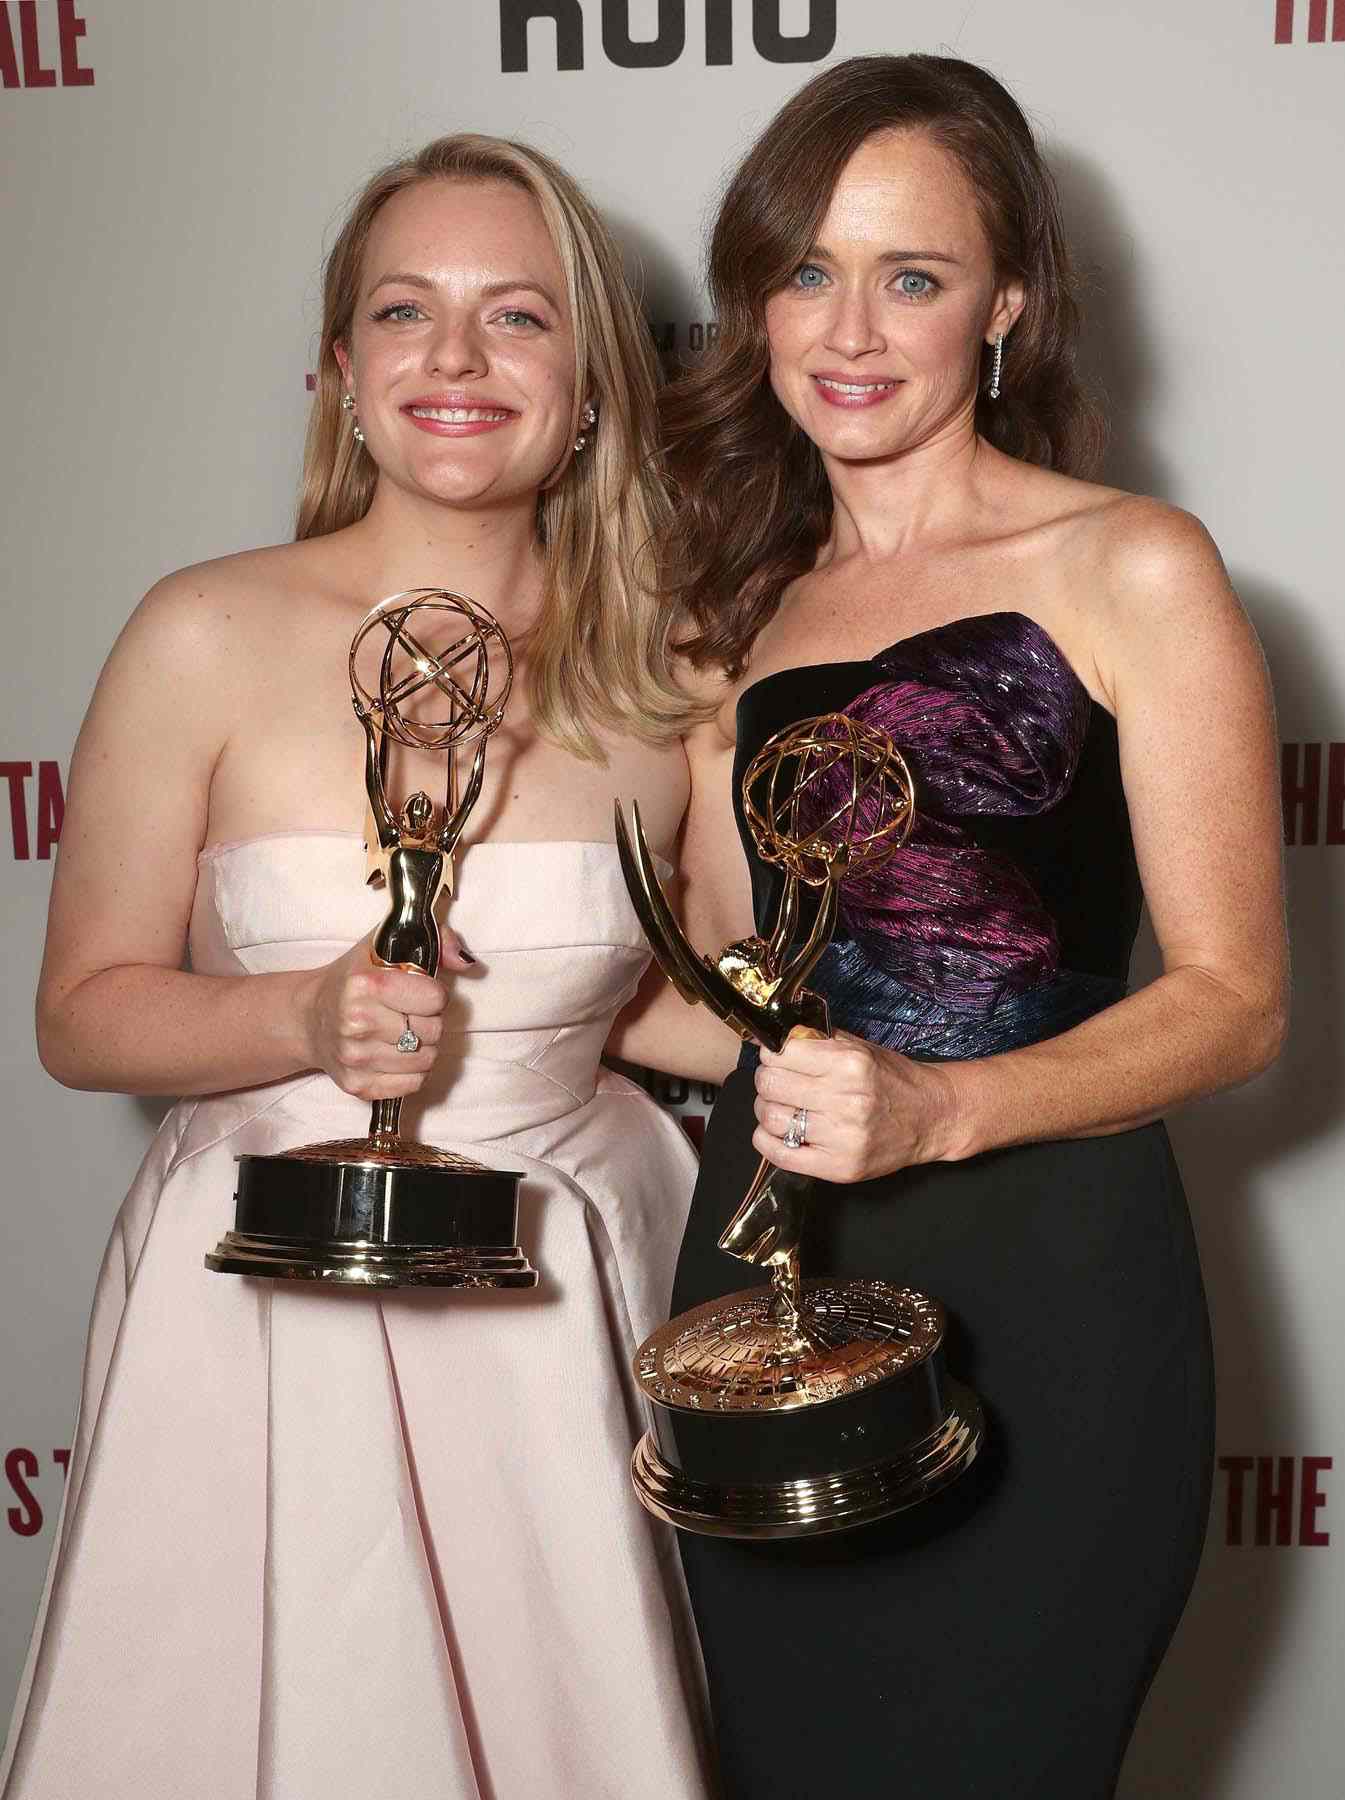 Hulu's 2017 Emmy After Party